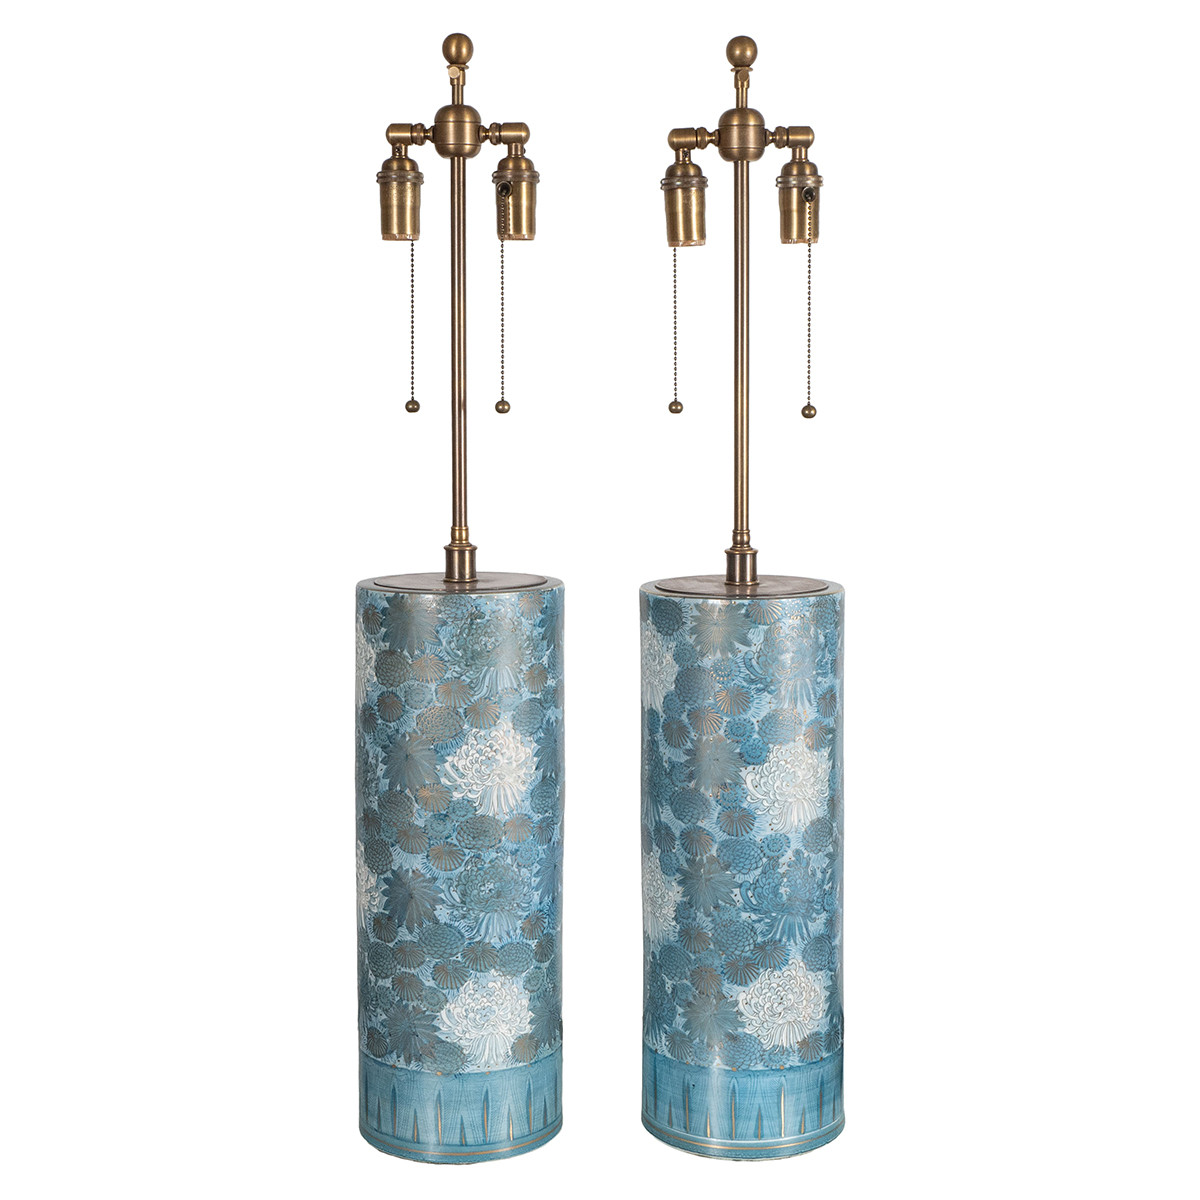 Pair of Japanese flower motif ceramic table lamps